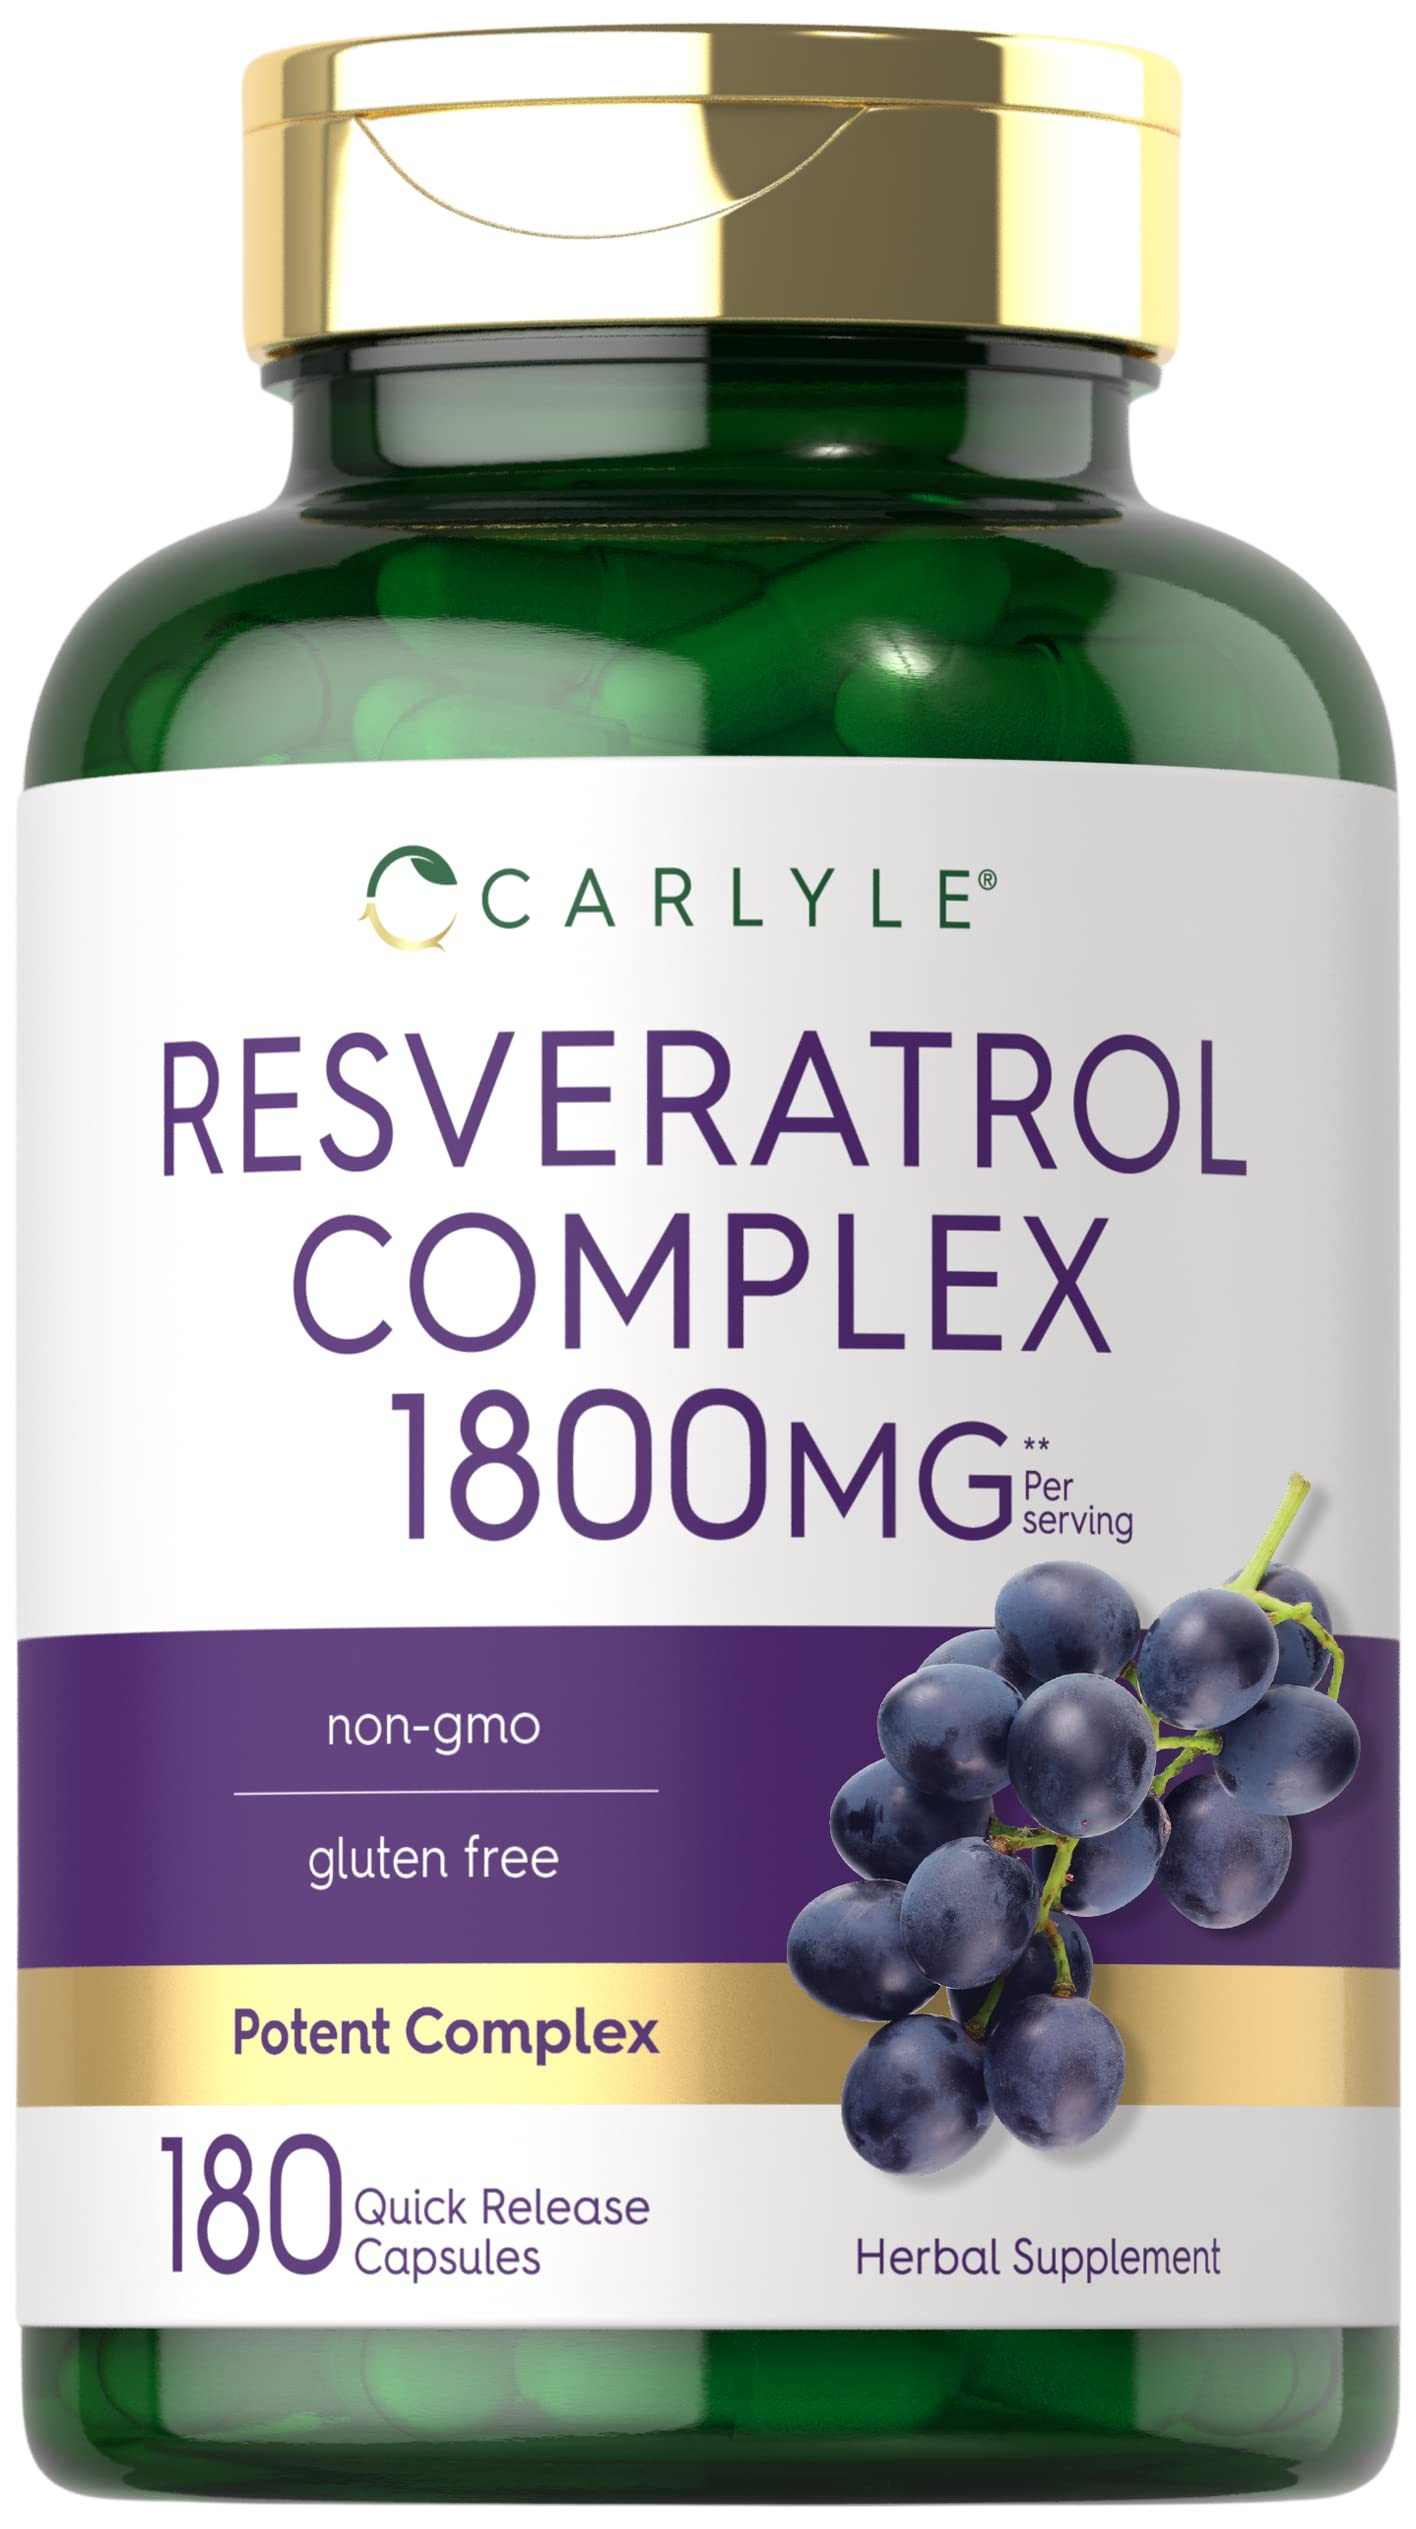 Carlyle Resveratrol Supplement